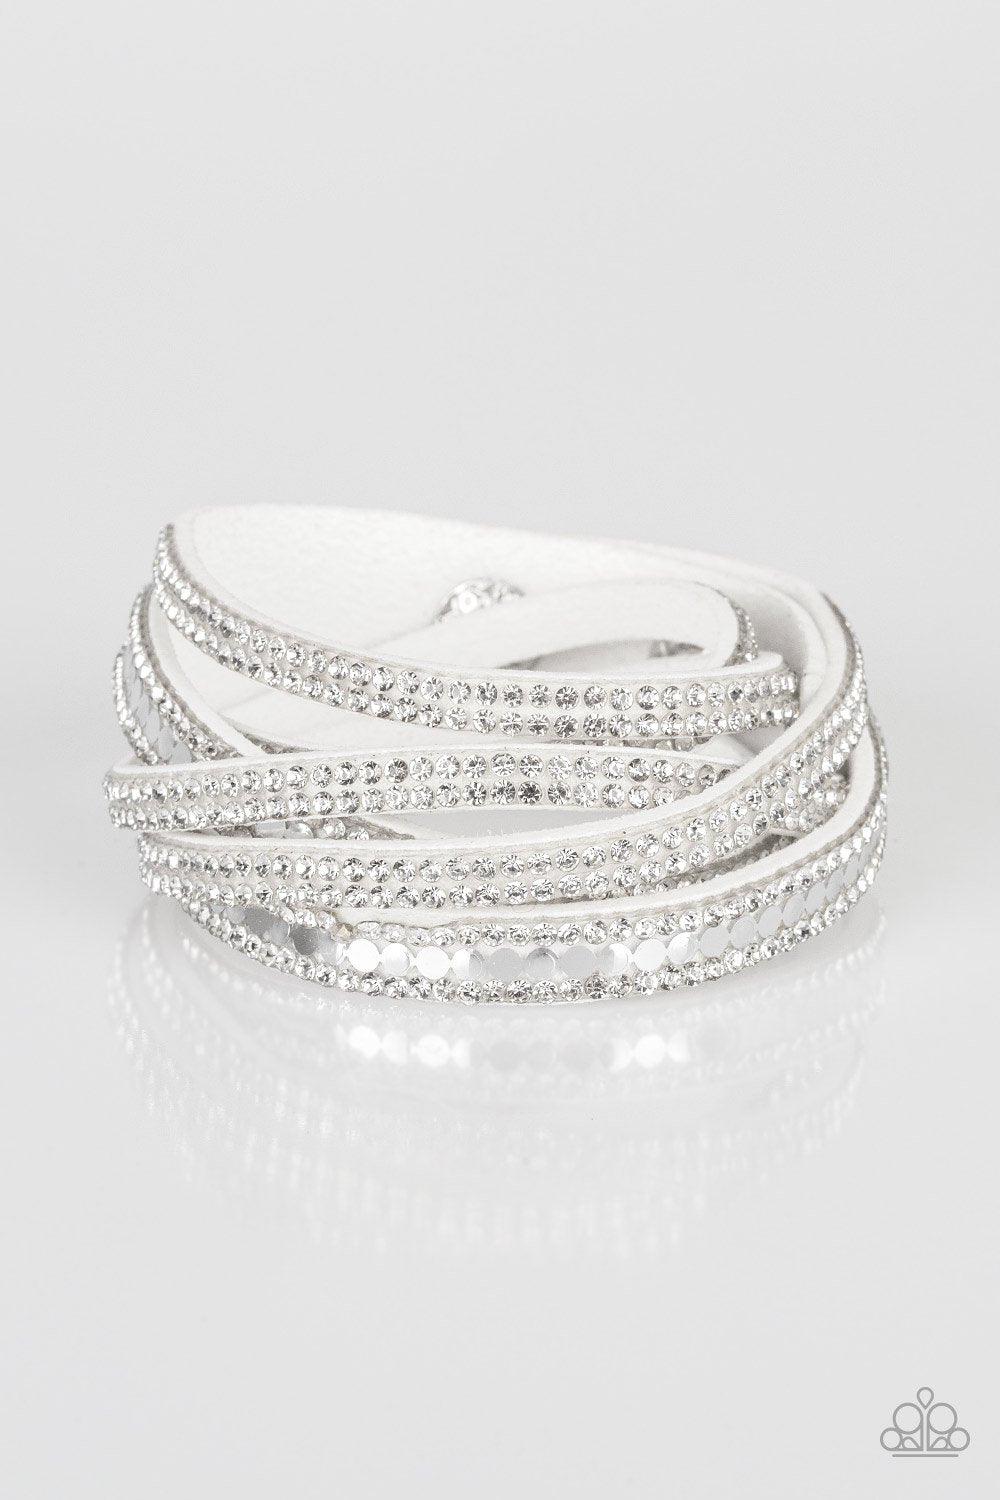 Rock Star Attitude White Urban Double-wrap Snap Bracelet - Paparazzi Accessories-CarasShop.com - $5 Jewelry by Cara Jewels